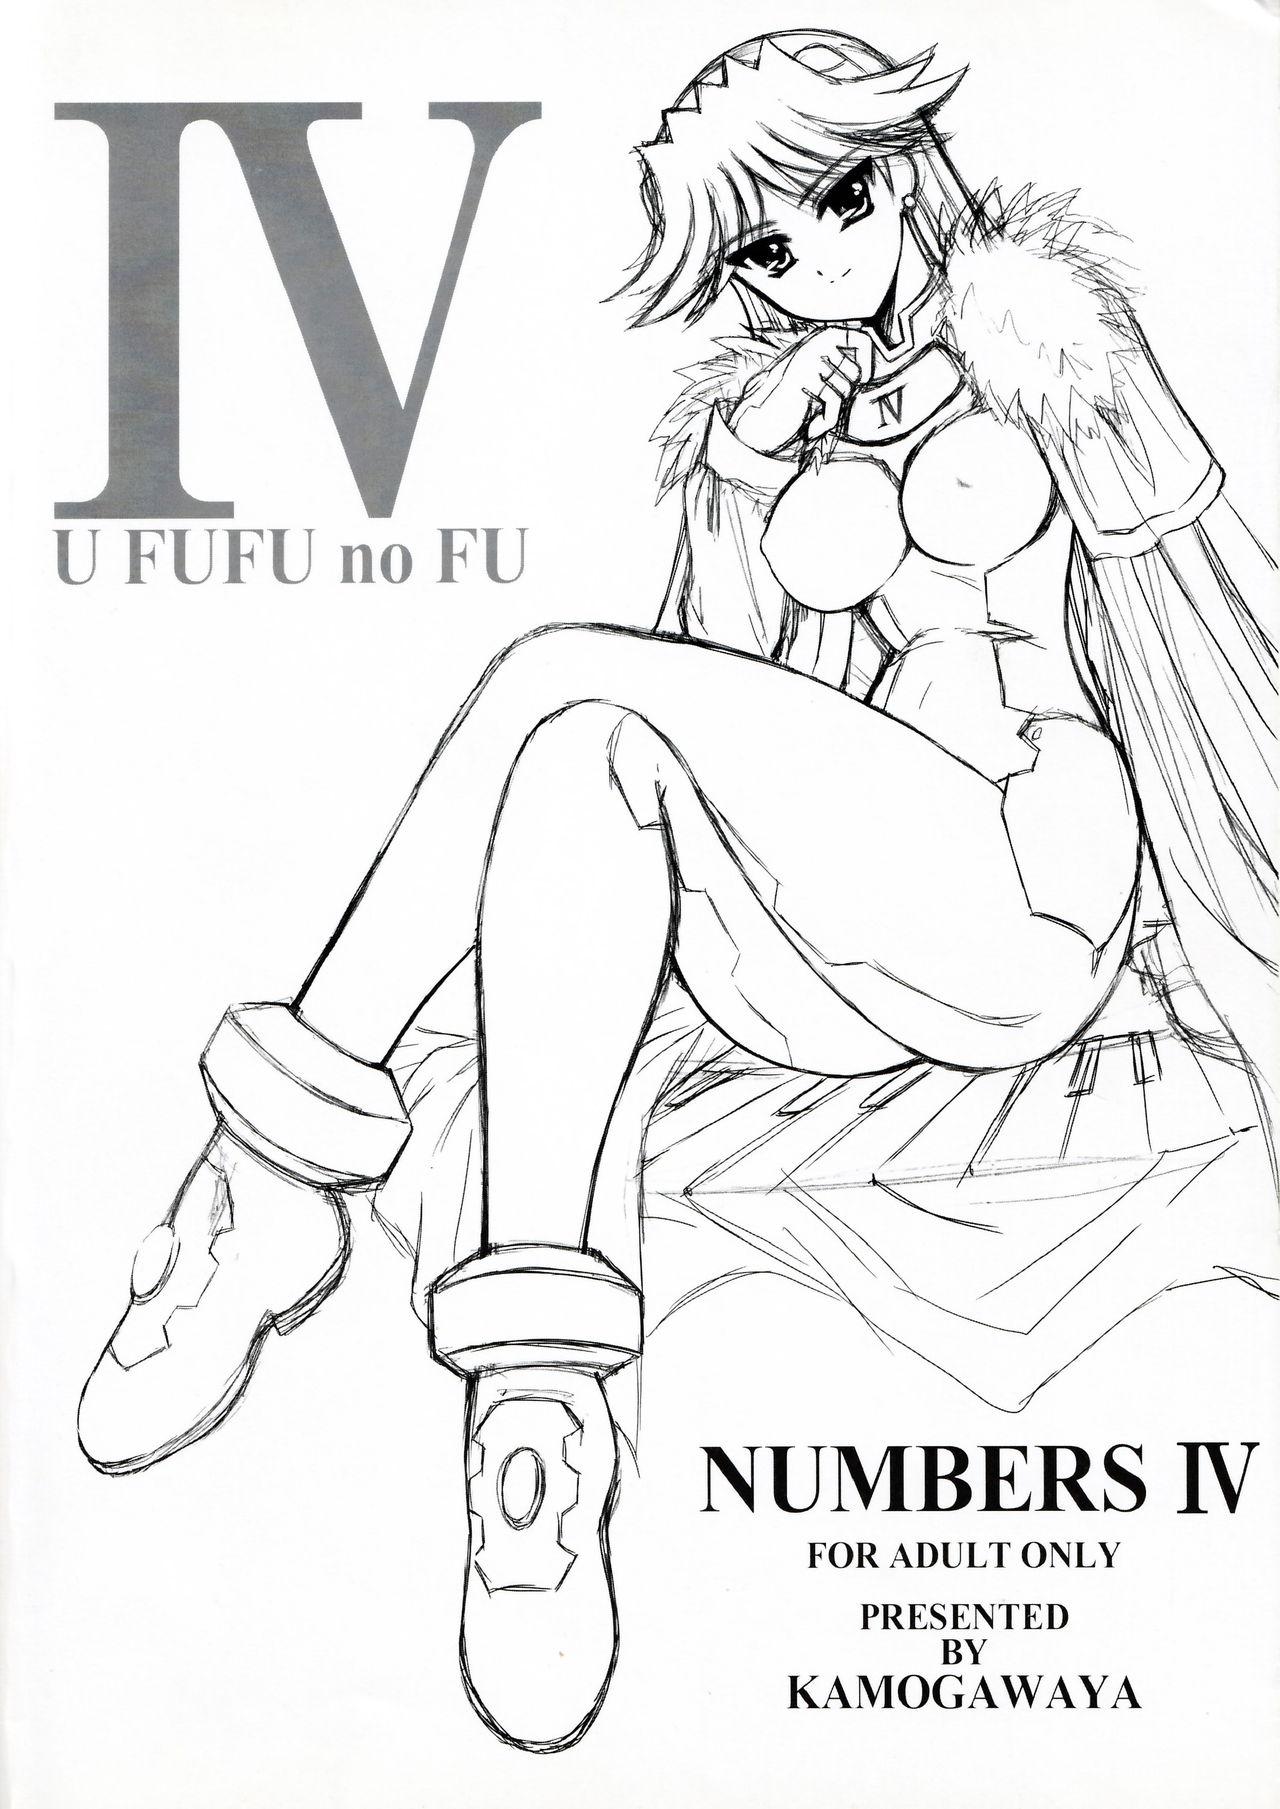 Ufufuu no Fu IV 19